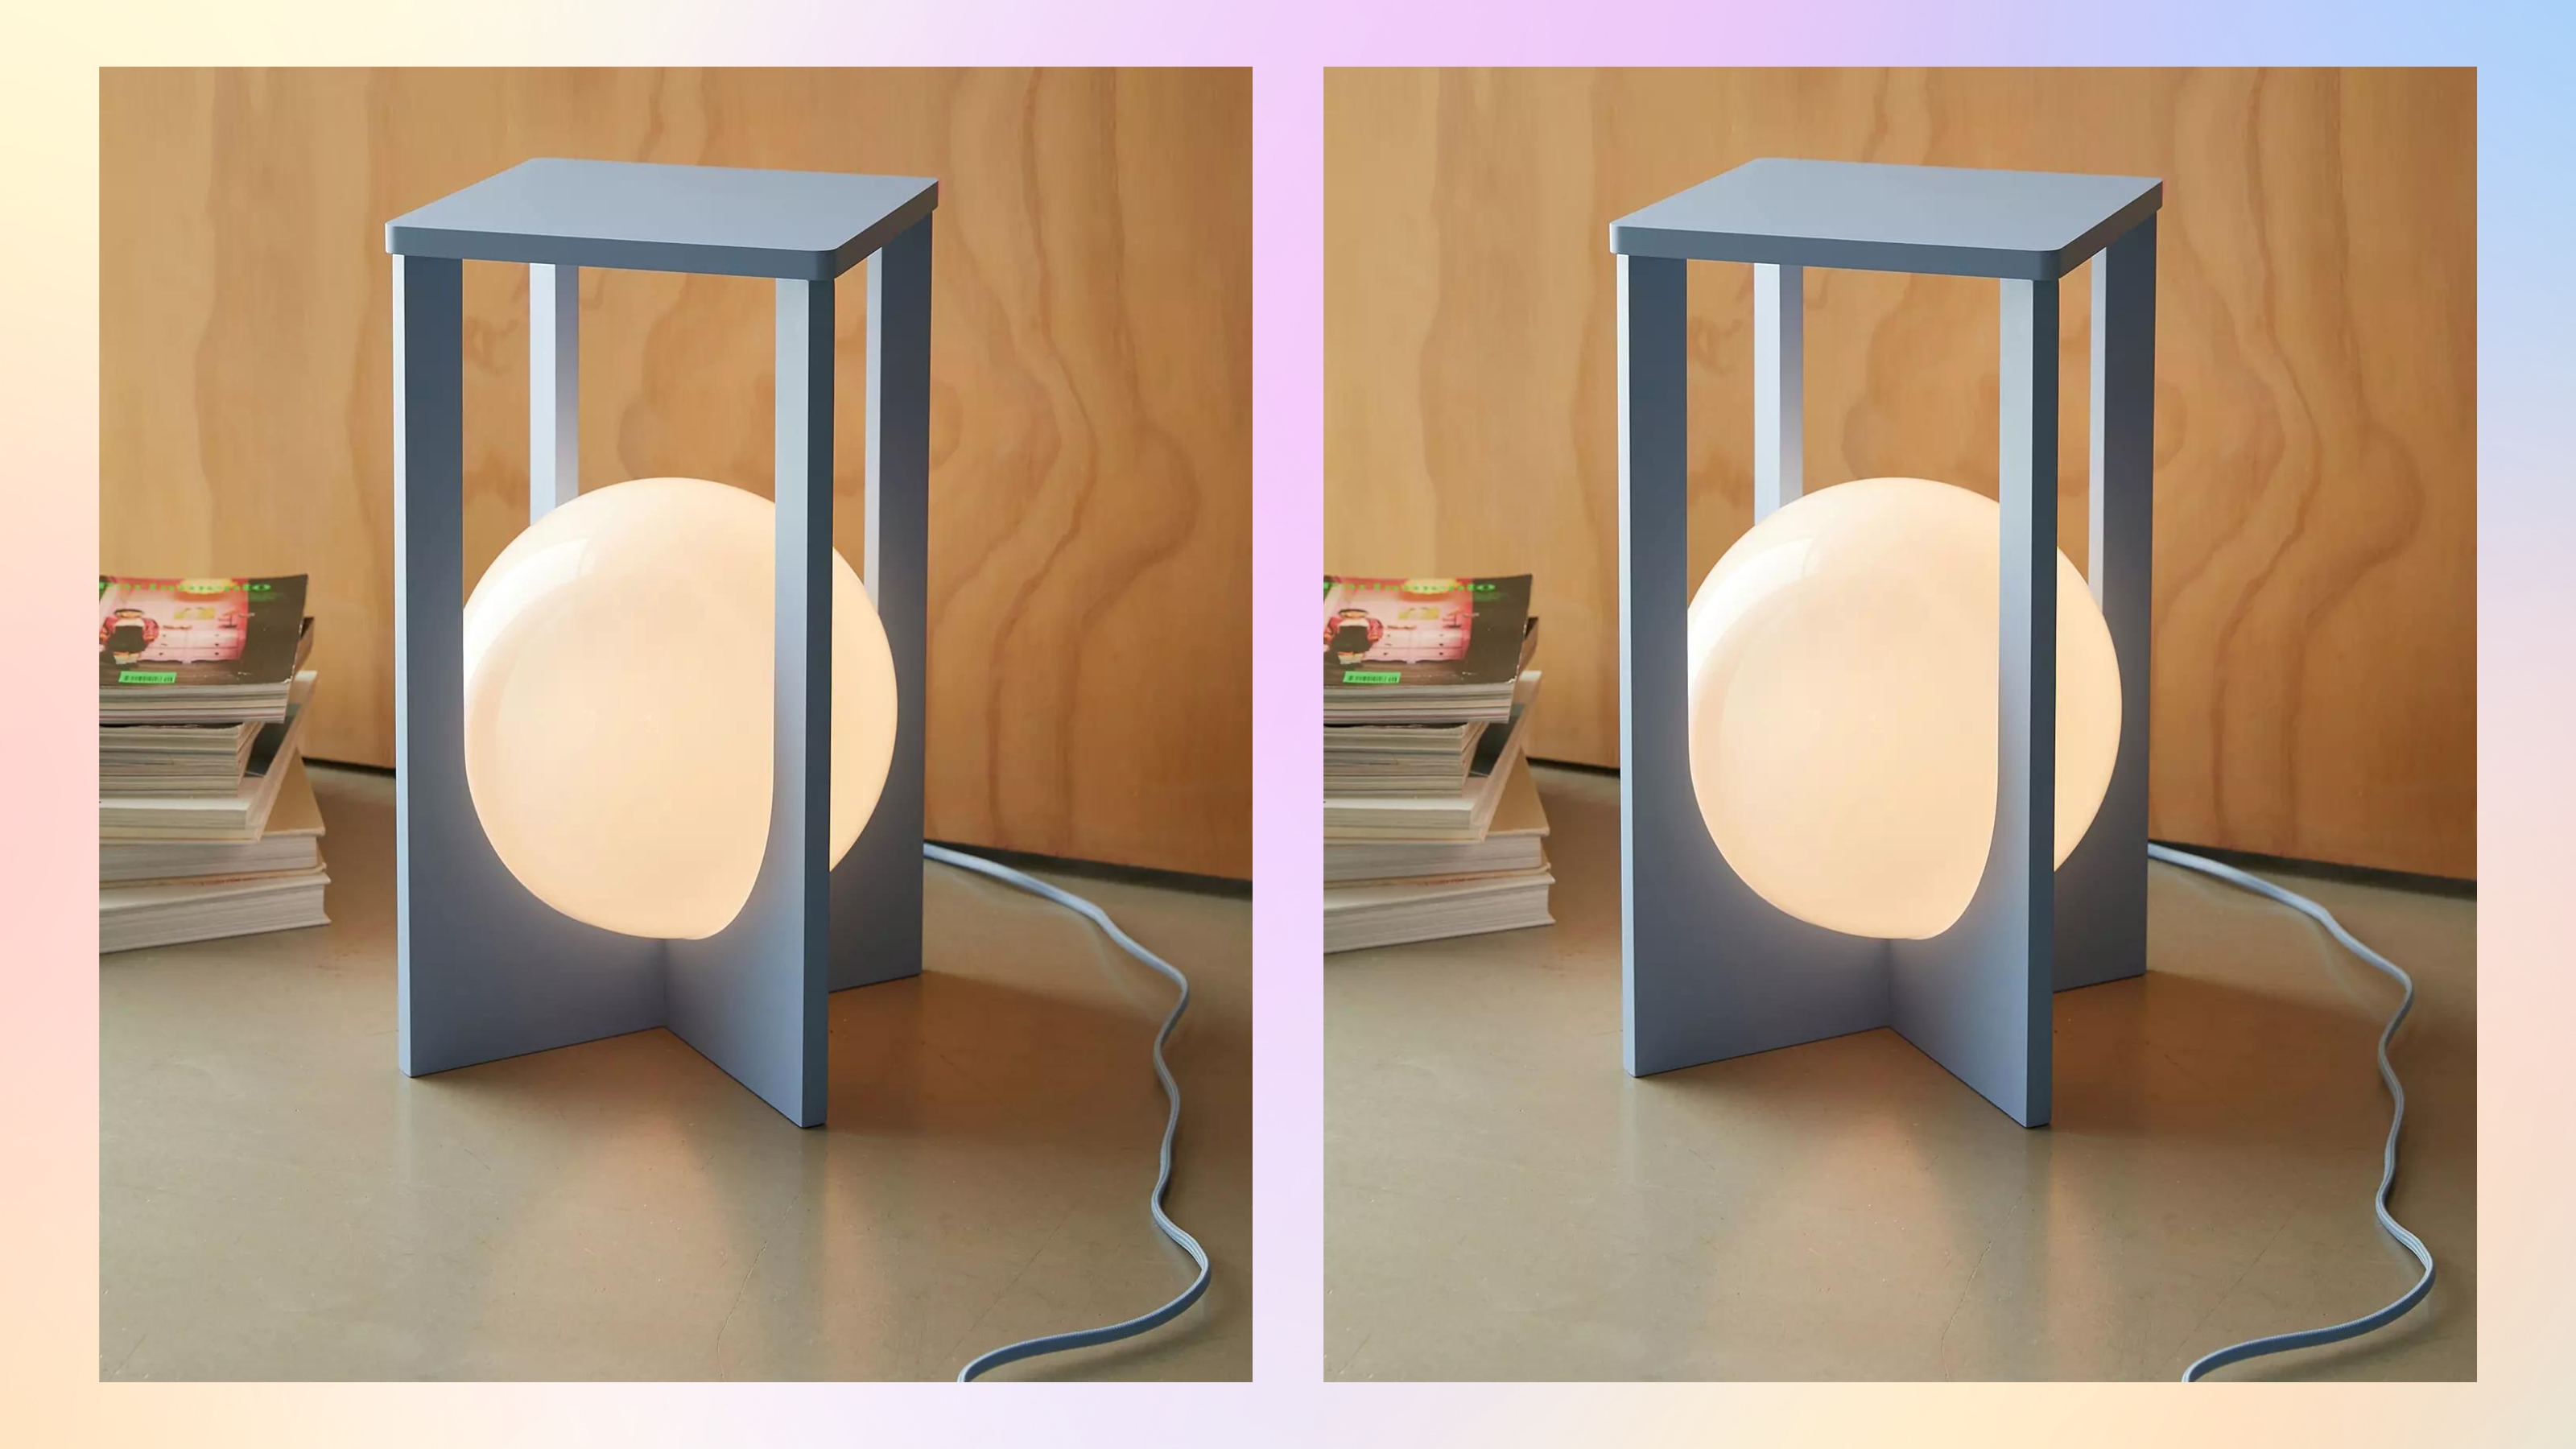 Betus Motion Sensor Night Light, Battery Operated Lamp Table Desk Lamp, Yellow